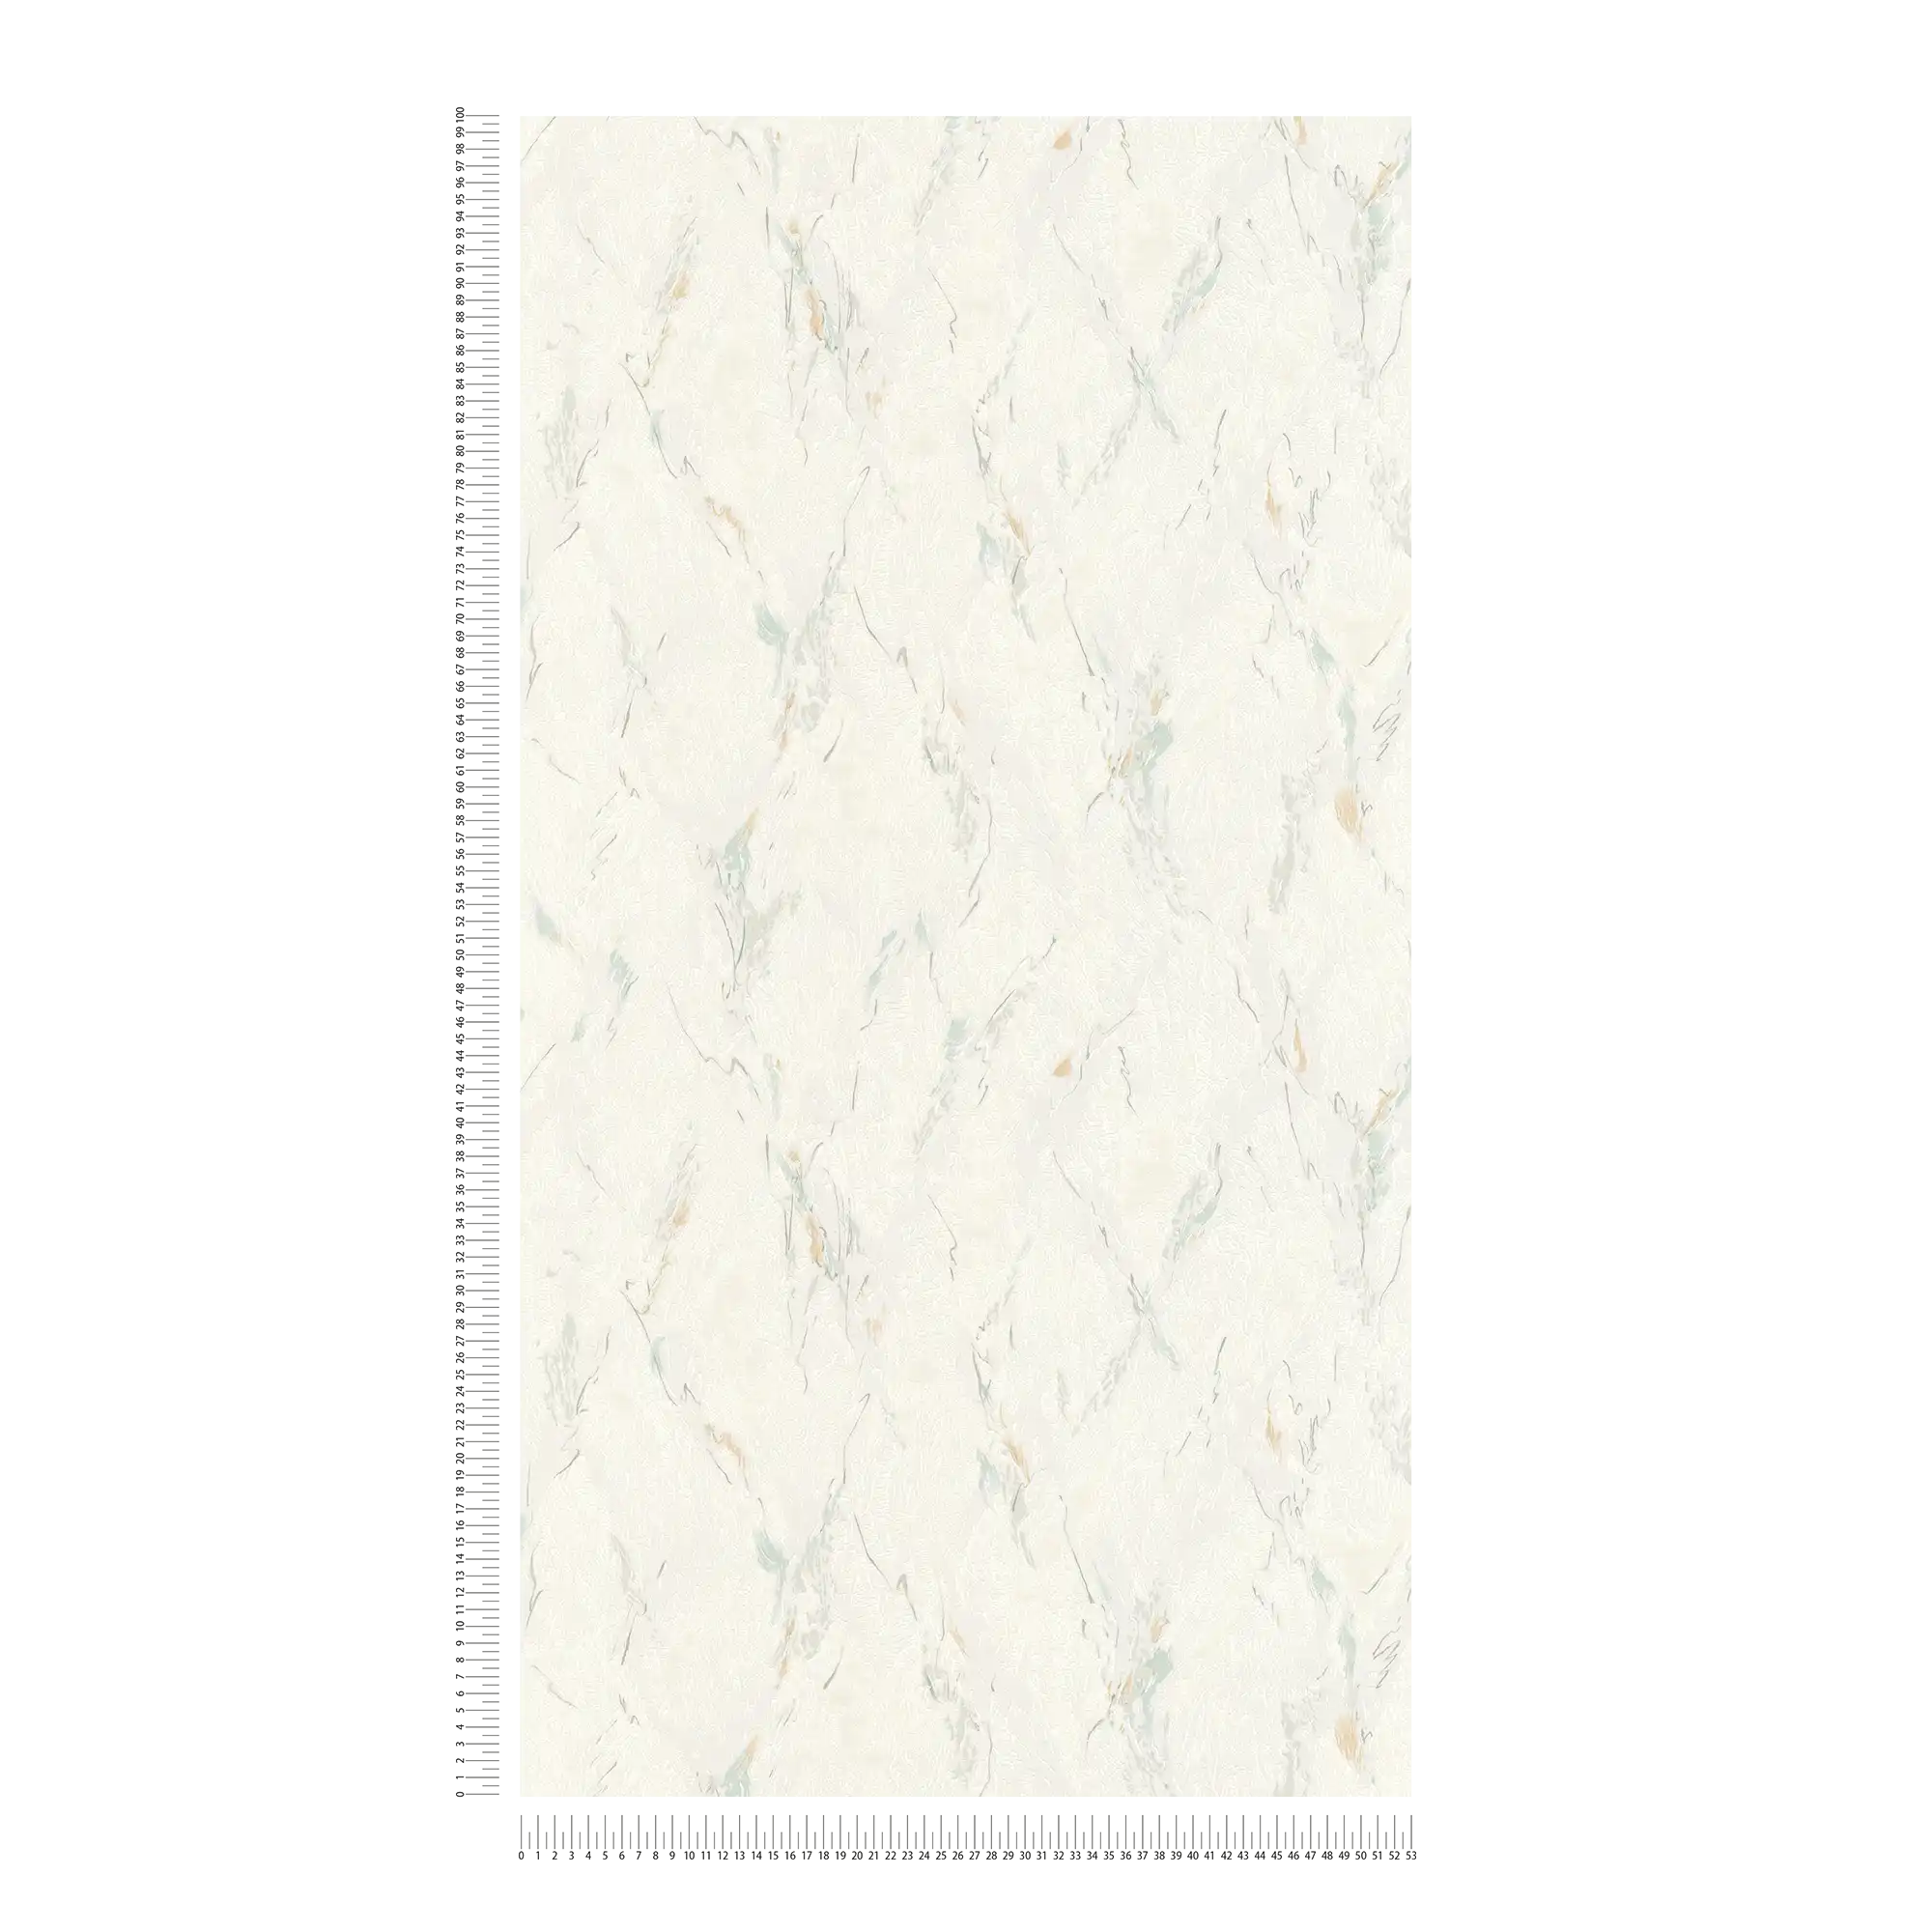             Marble grain & texture effect wallpaper - white
        